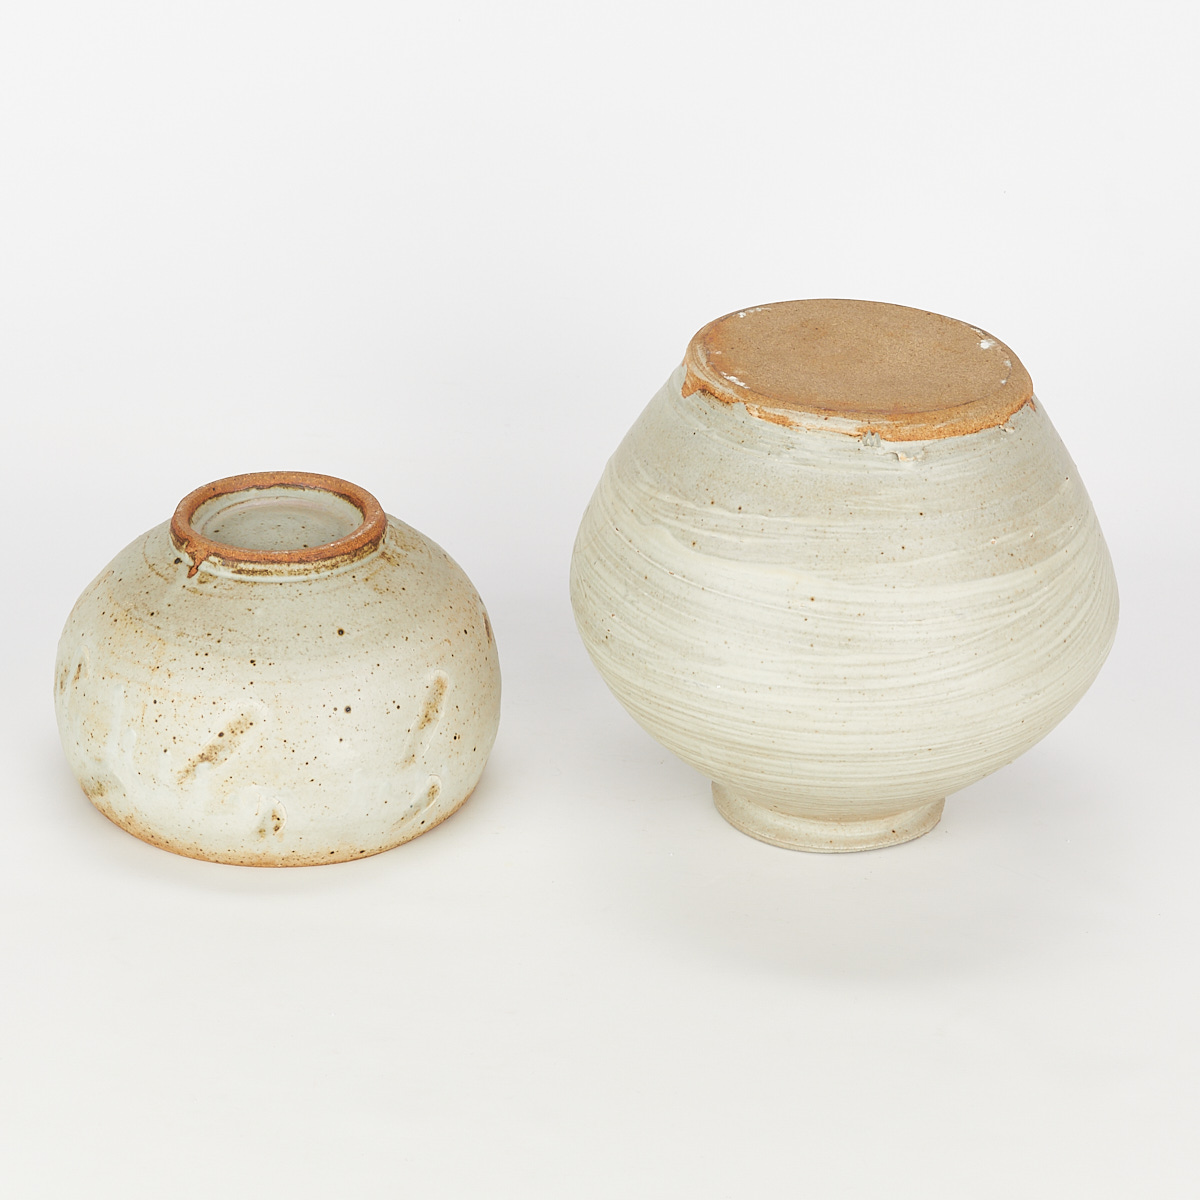 2 Studio Ceramic Vessels - Wayne Branum - Image 7 of 10